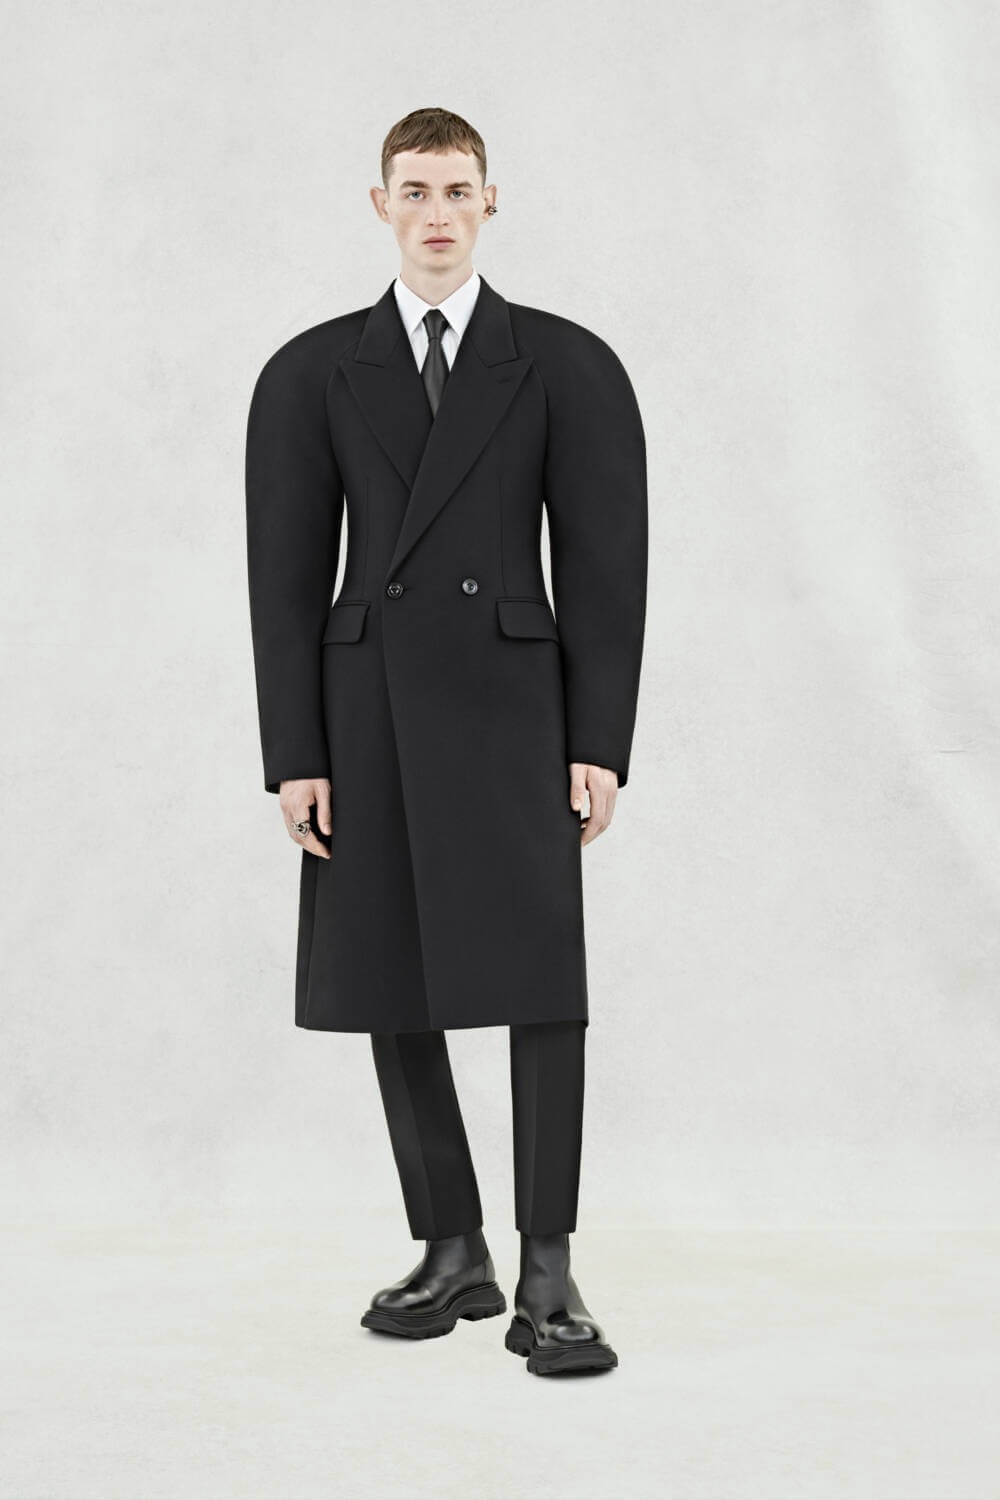 Alexander McQueen Floral Embroidered Suit Jacket in Black for Men | Lyst